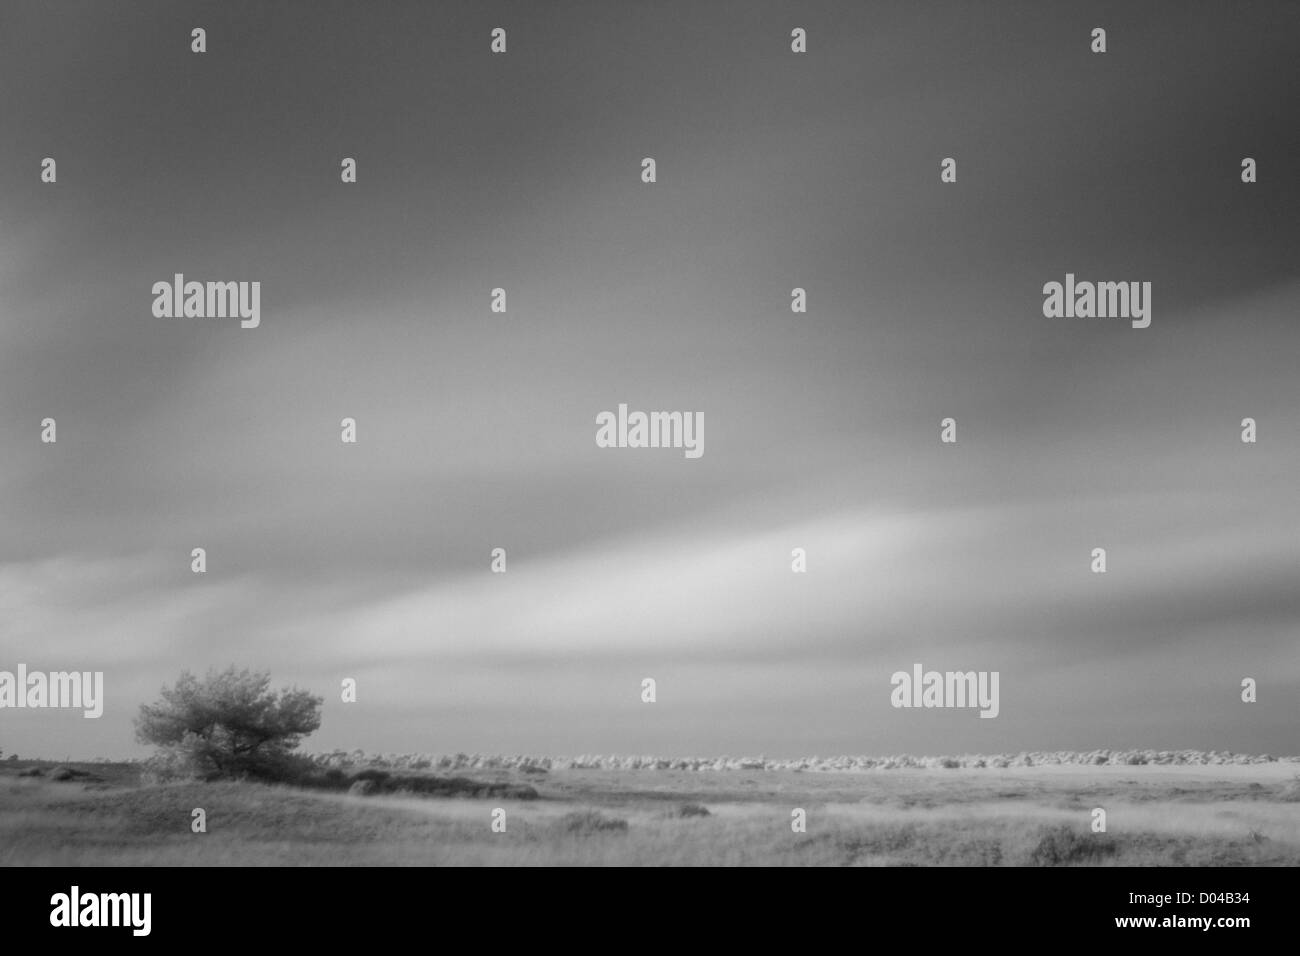 Driftsand Black and White Stock Photos & Images - Alamy